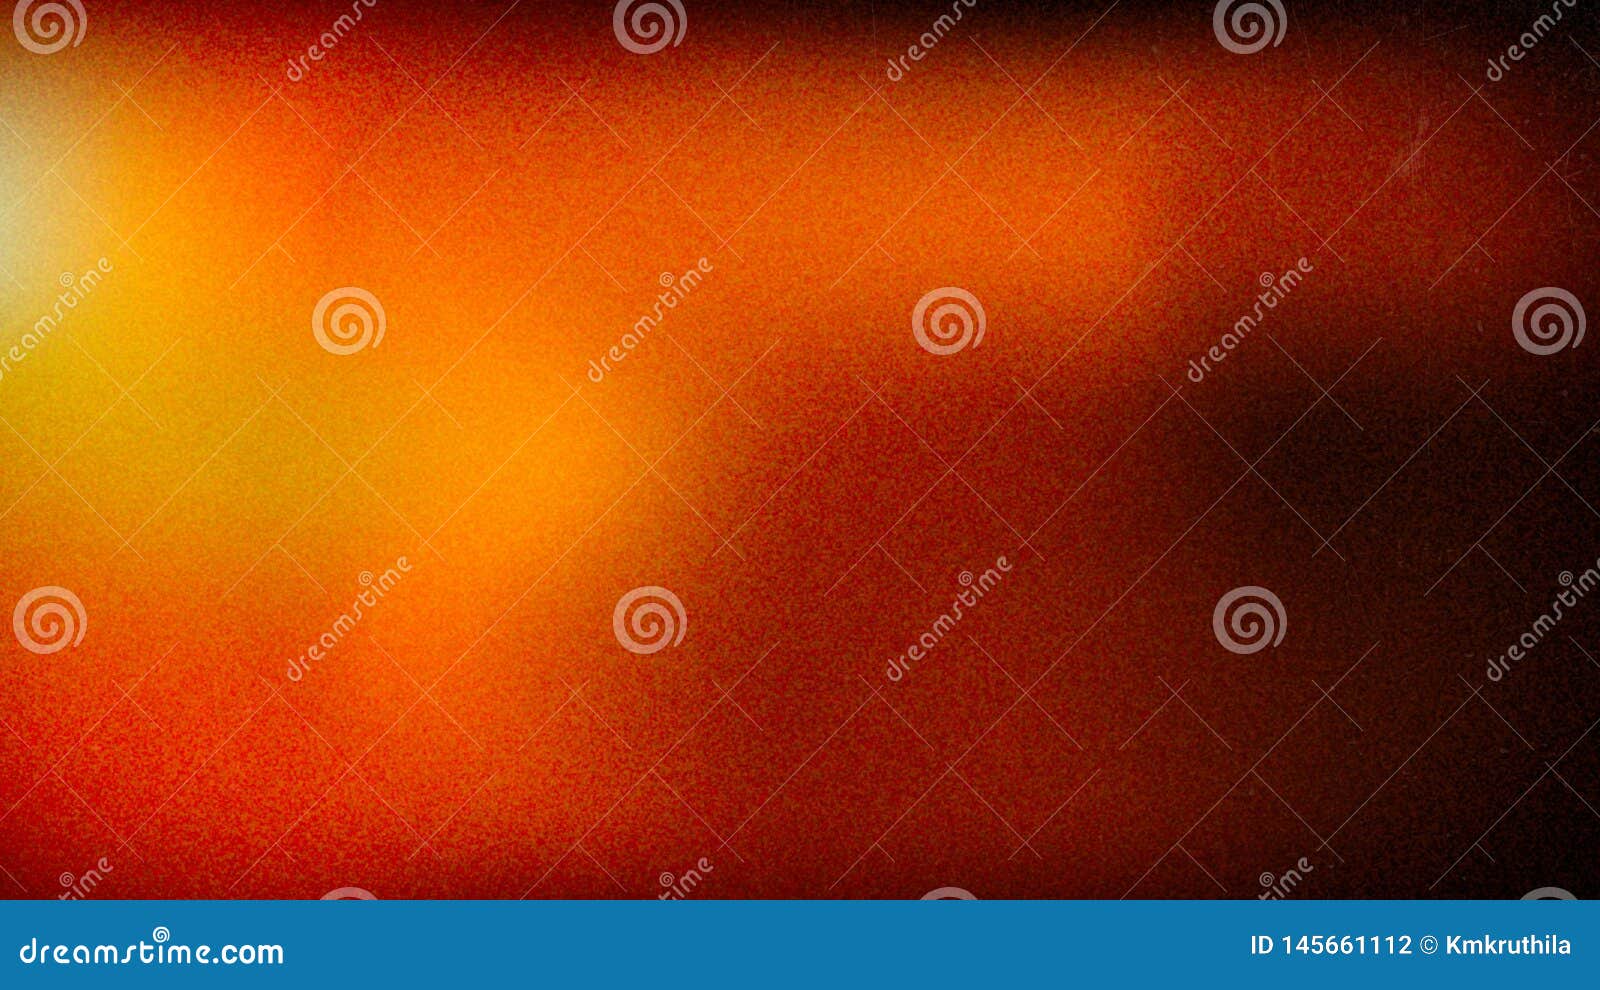 Orange Yellow Red Beautiful elegant Illustration graphic art design Background. Orange Yellow Red Background Beautiful elegant Illustration graphic art design